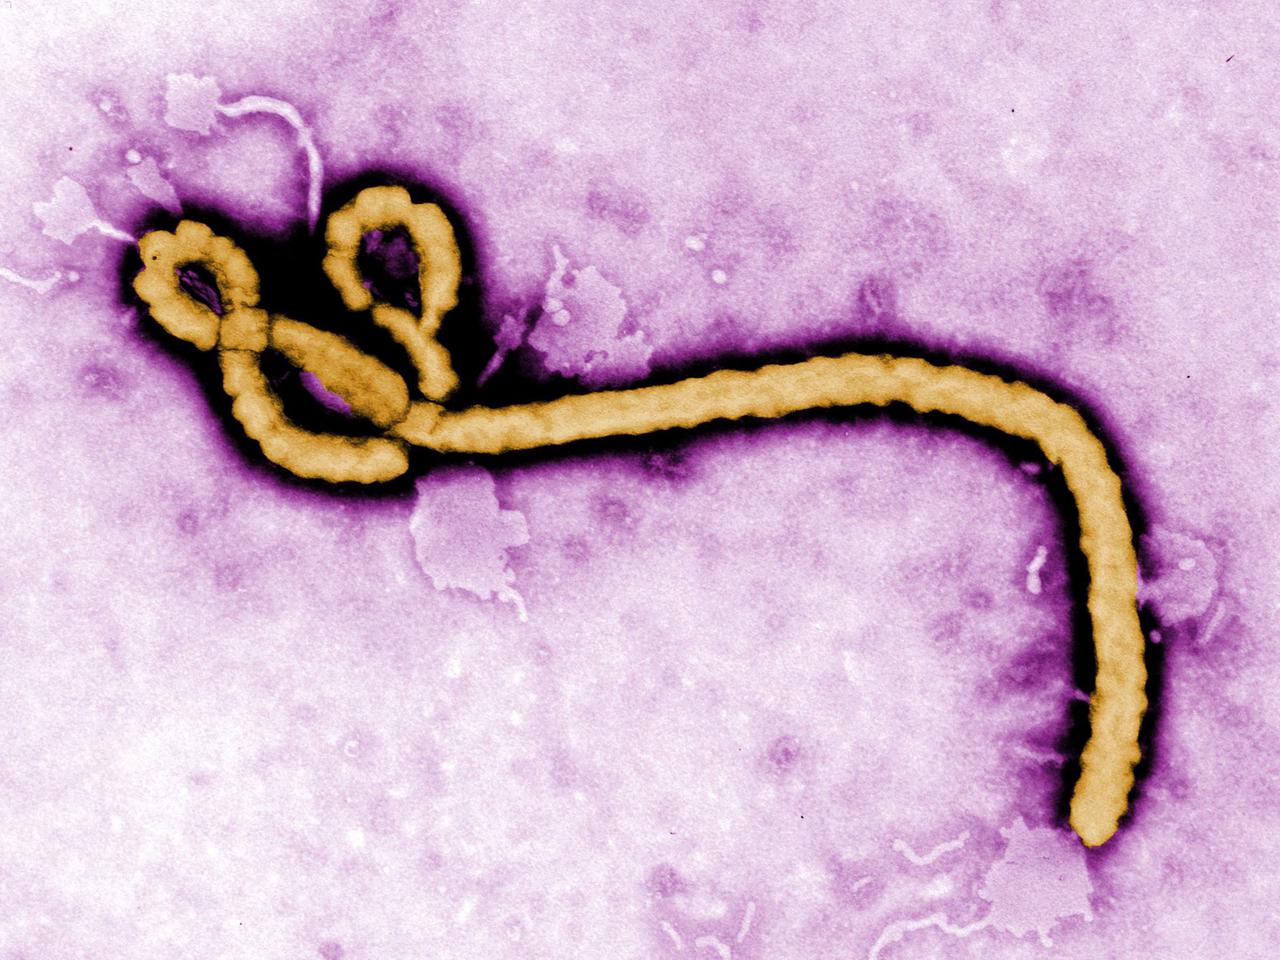 Mikroskop-Aufnahme des Ebola-Virus